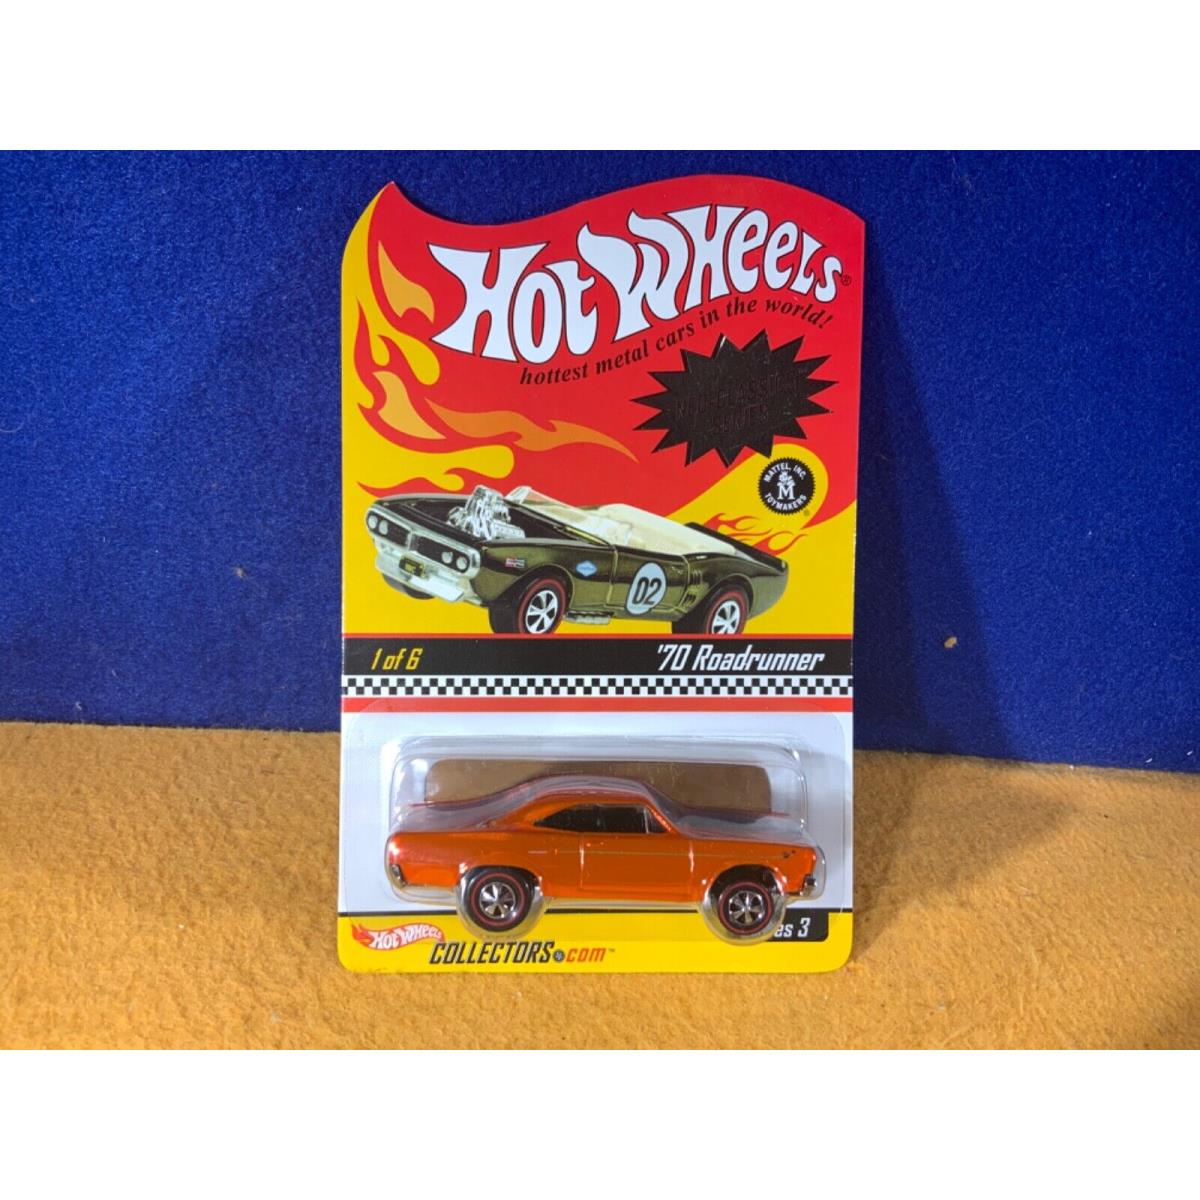 L9-54 Hot Wheels Neo Classics Series - 70 Roadrunner - Orange - 3912 / 10500